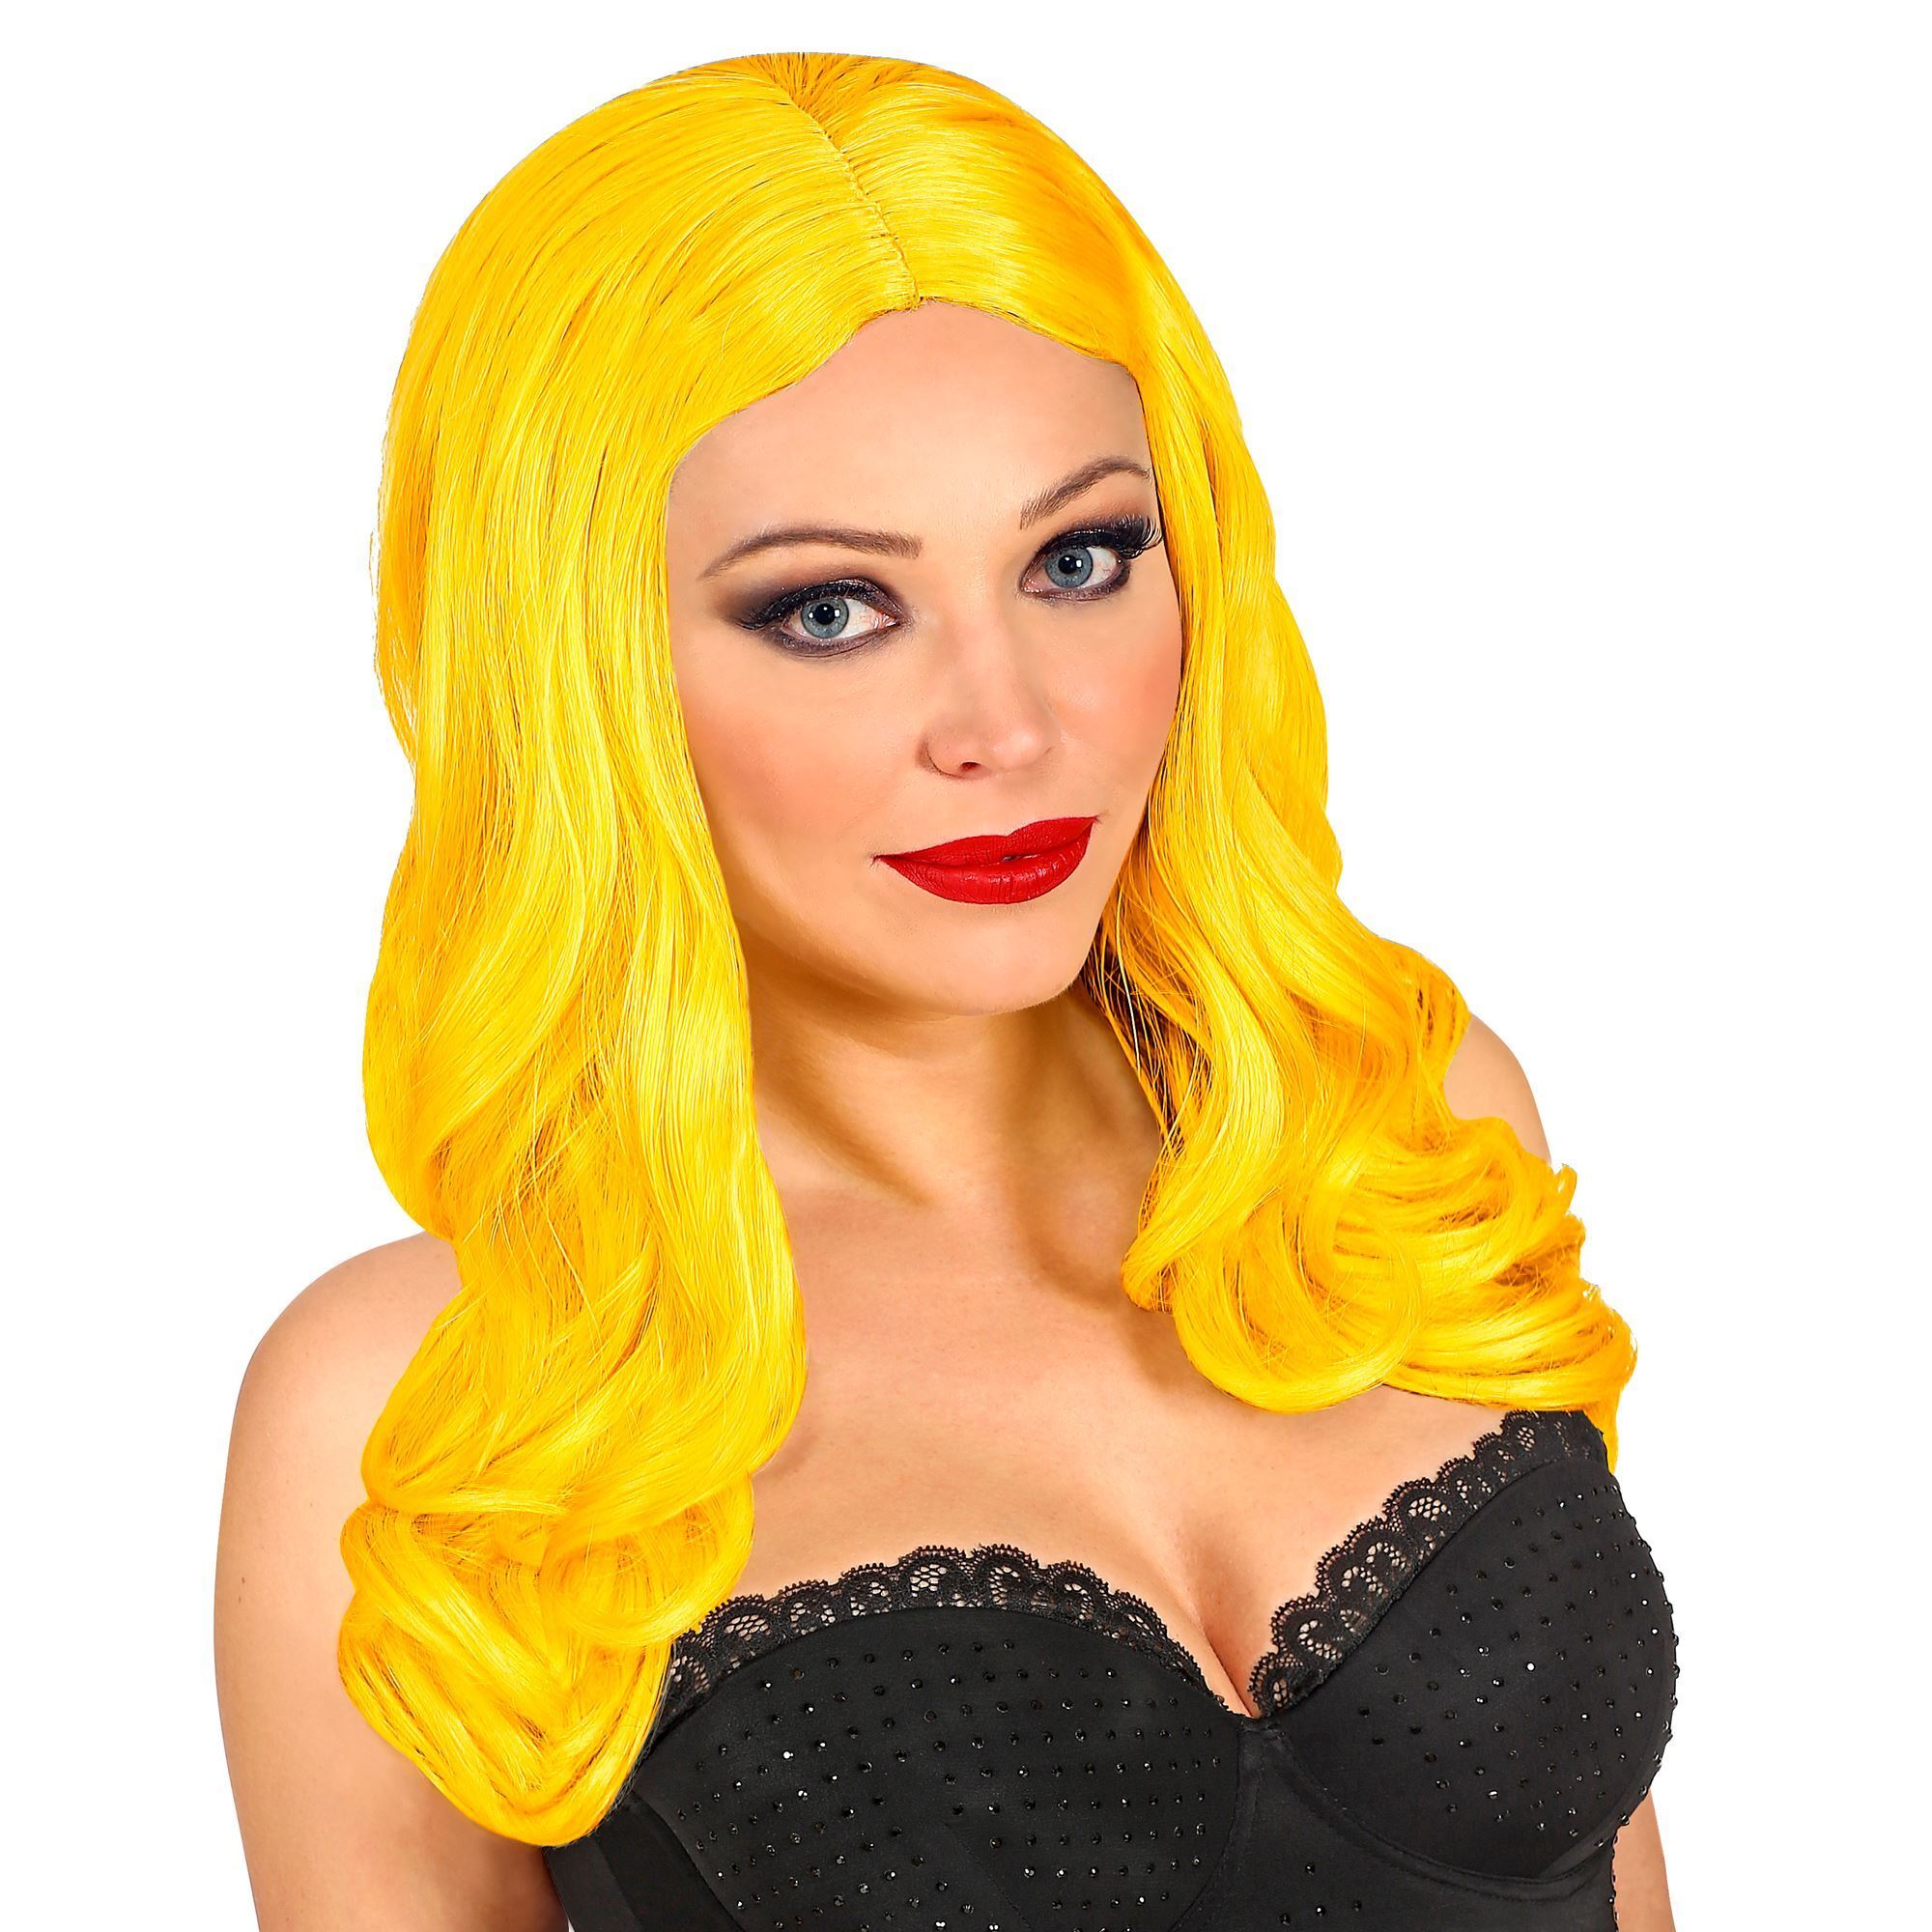 Roxy pruik geel lang haar